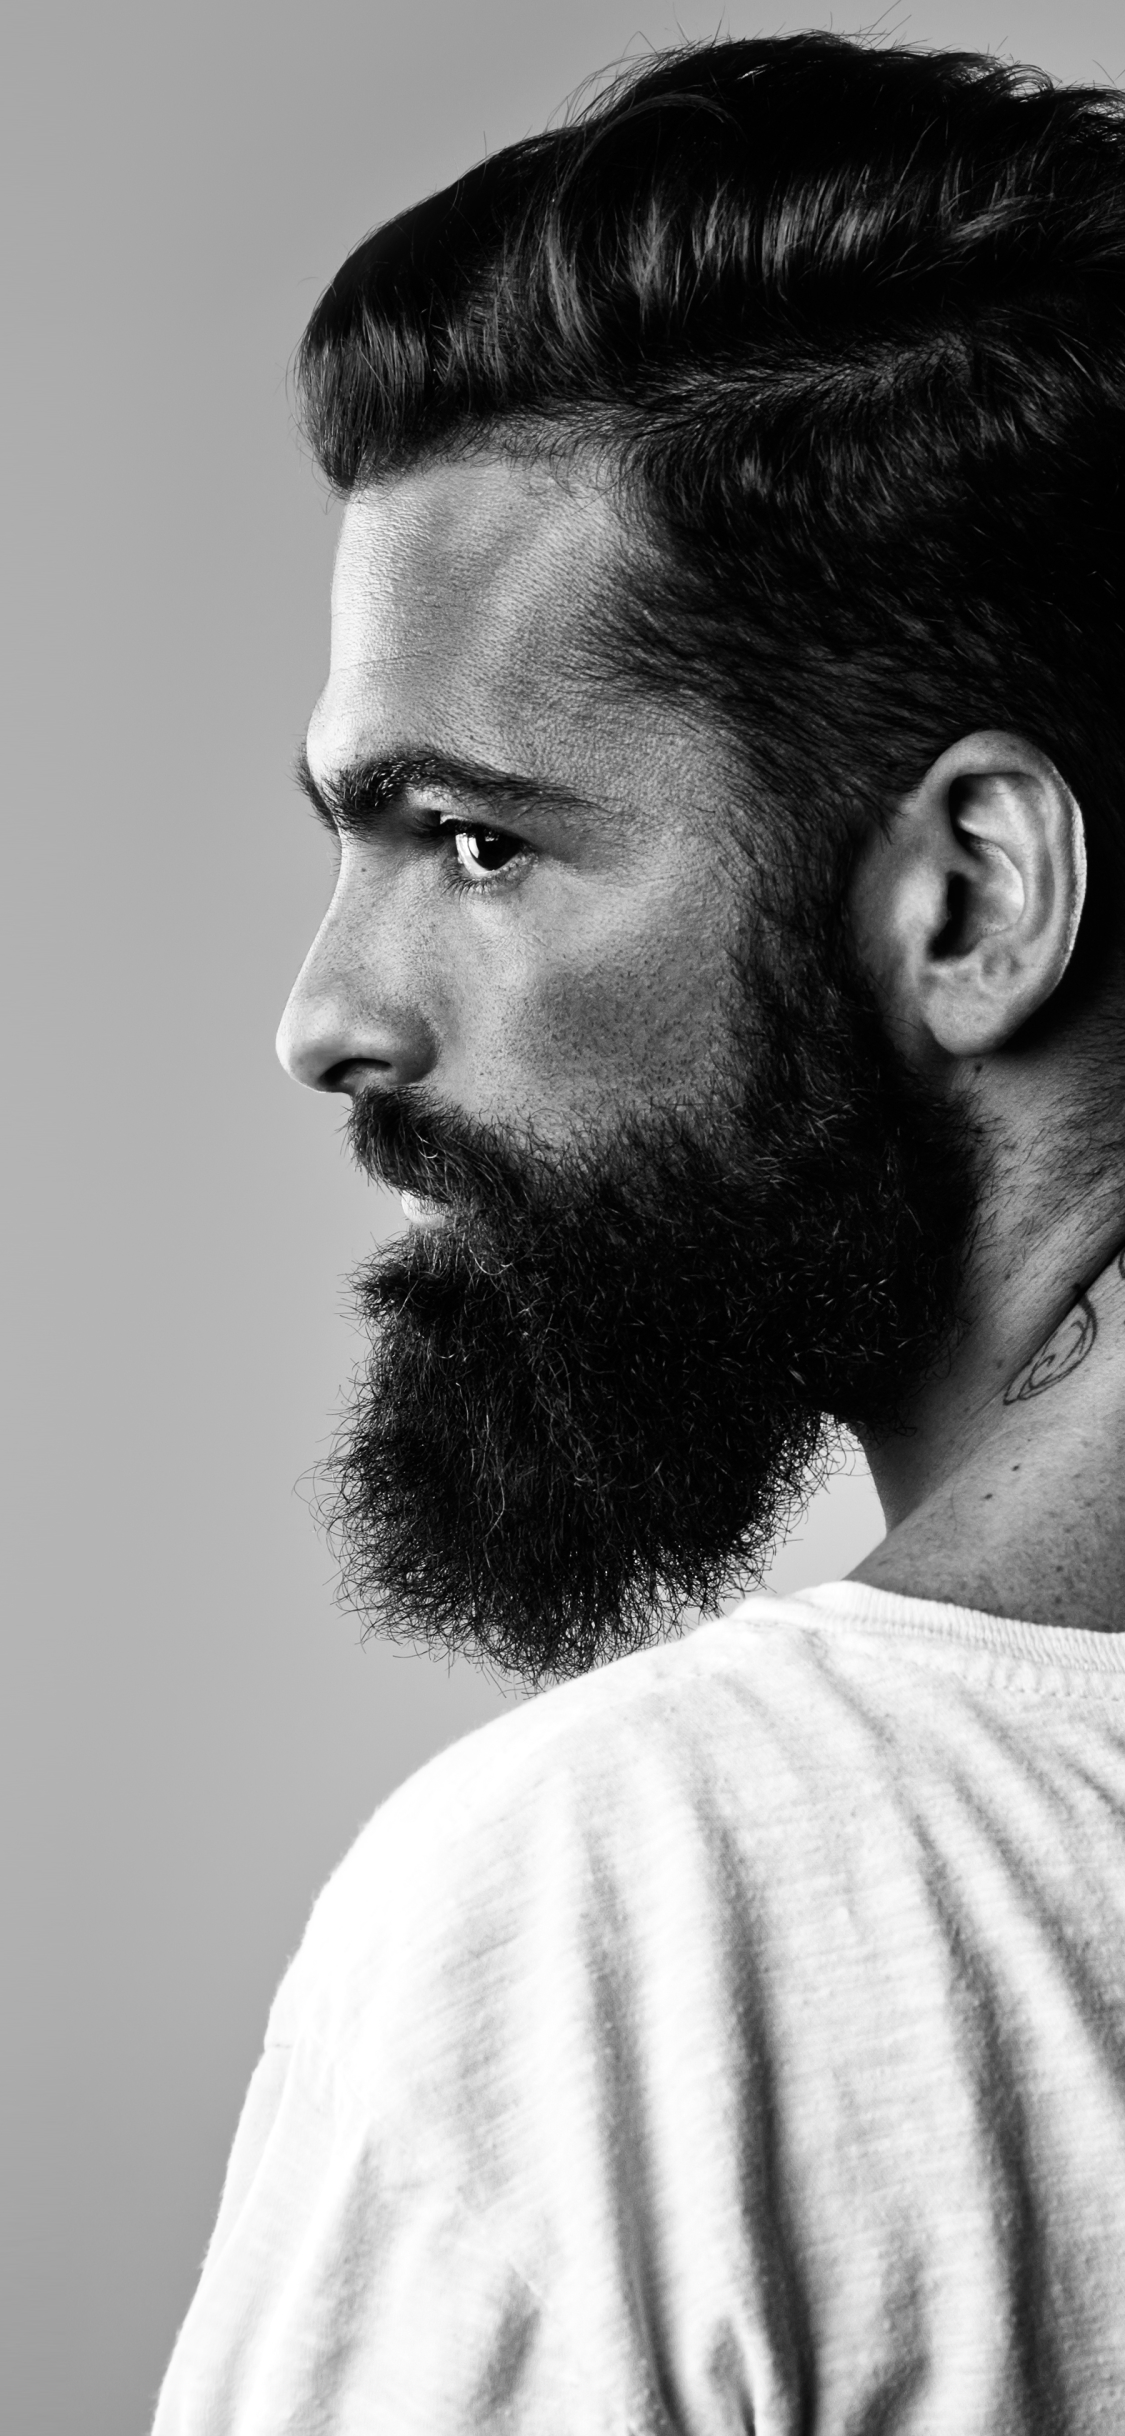 O Beard, Where Art Thou? | Desiring God